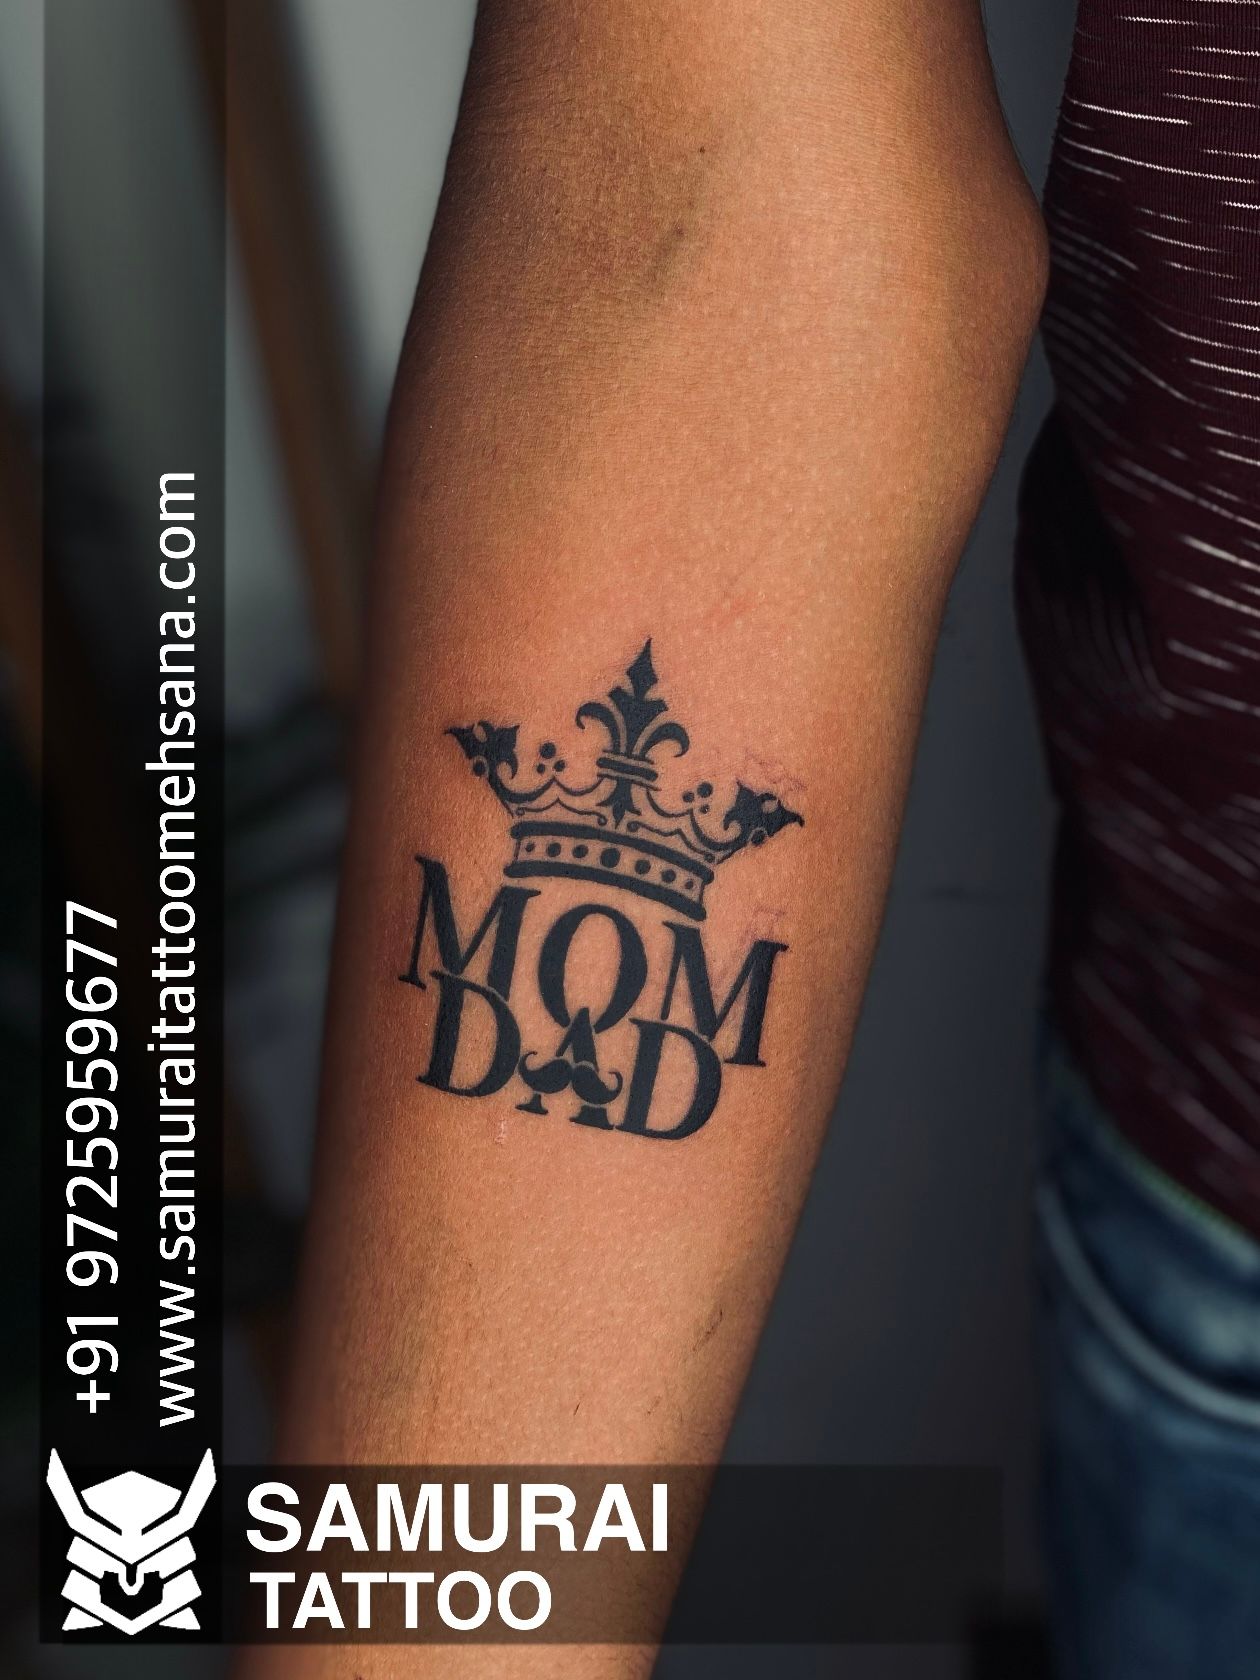 Mom dad tattoo ideas | Mom dad tattoos, Mom dad tattoo designs, Dad tattoos